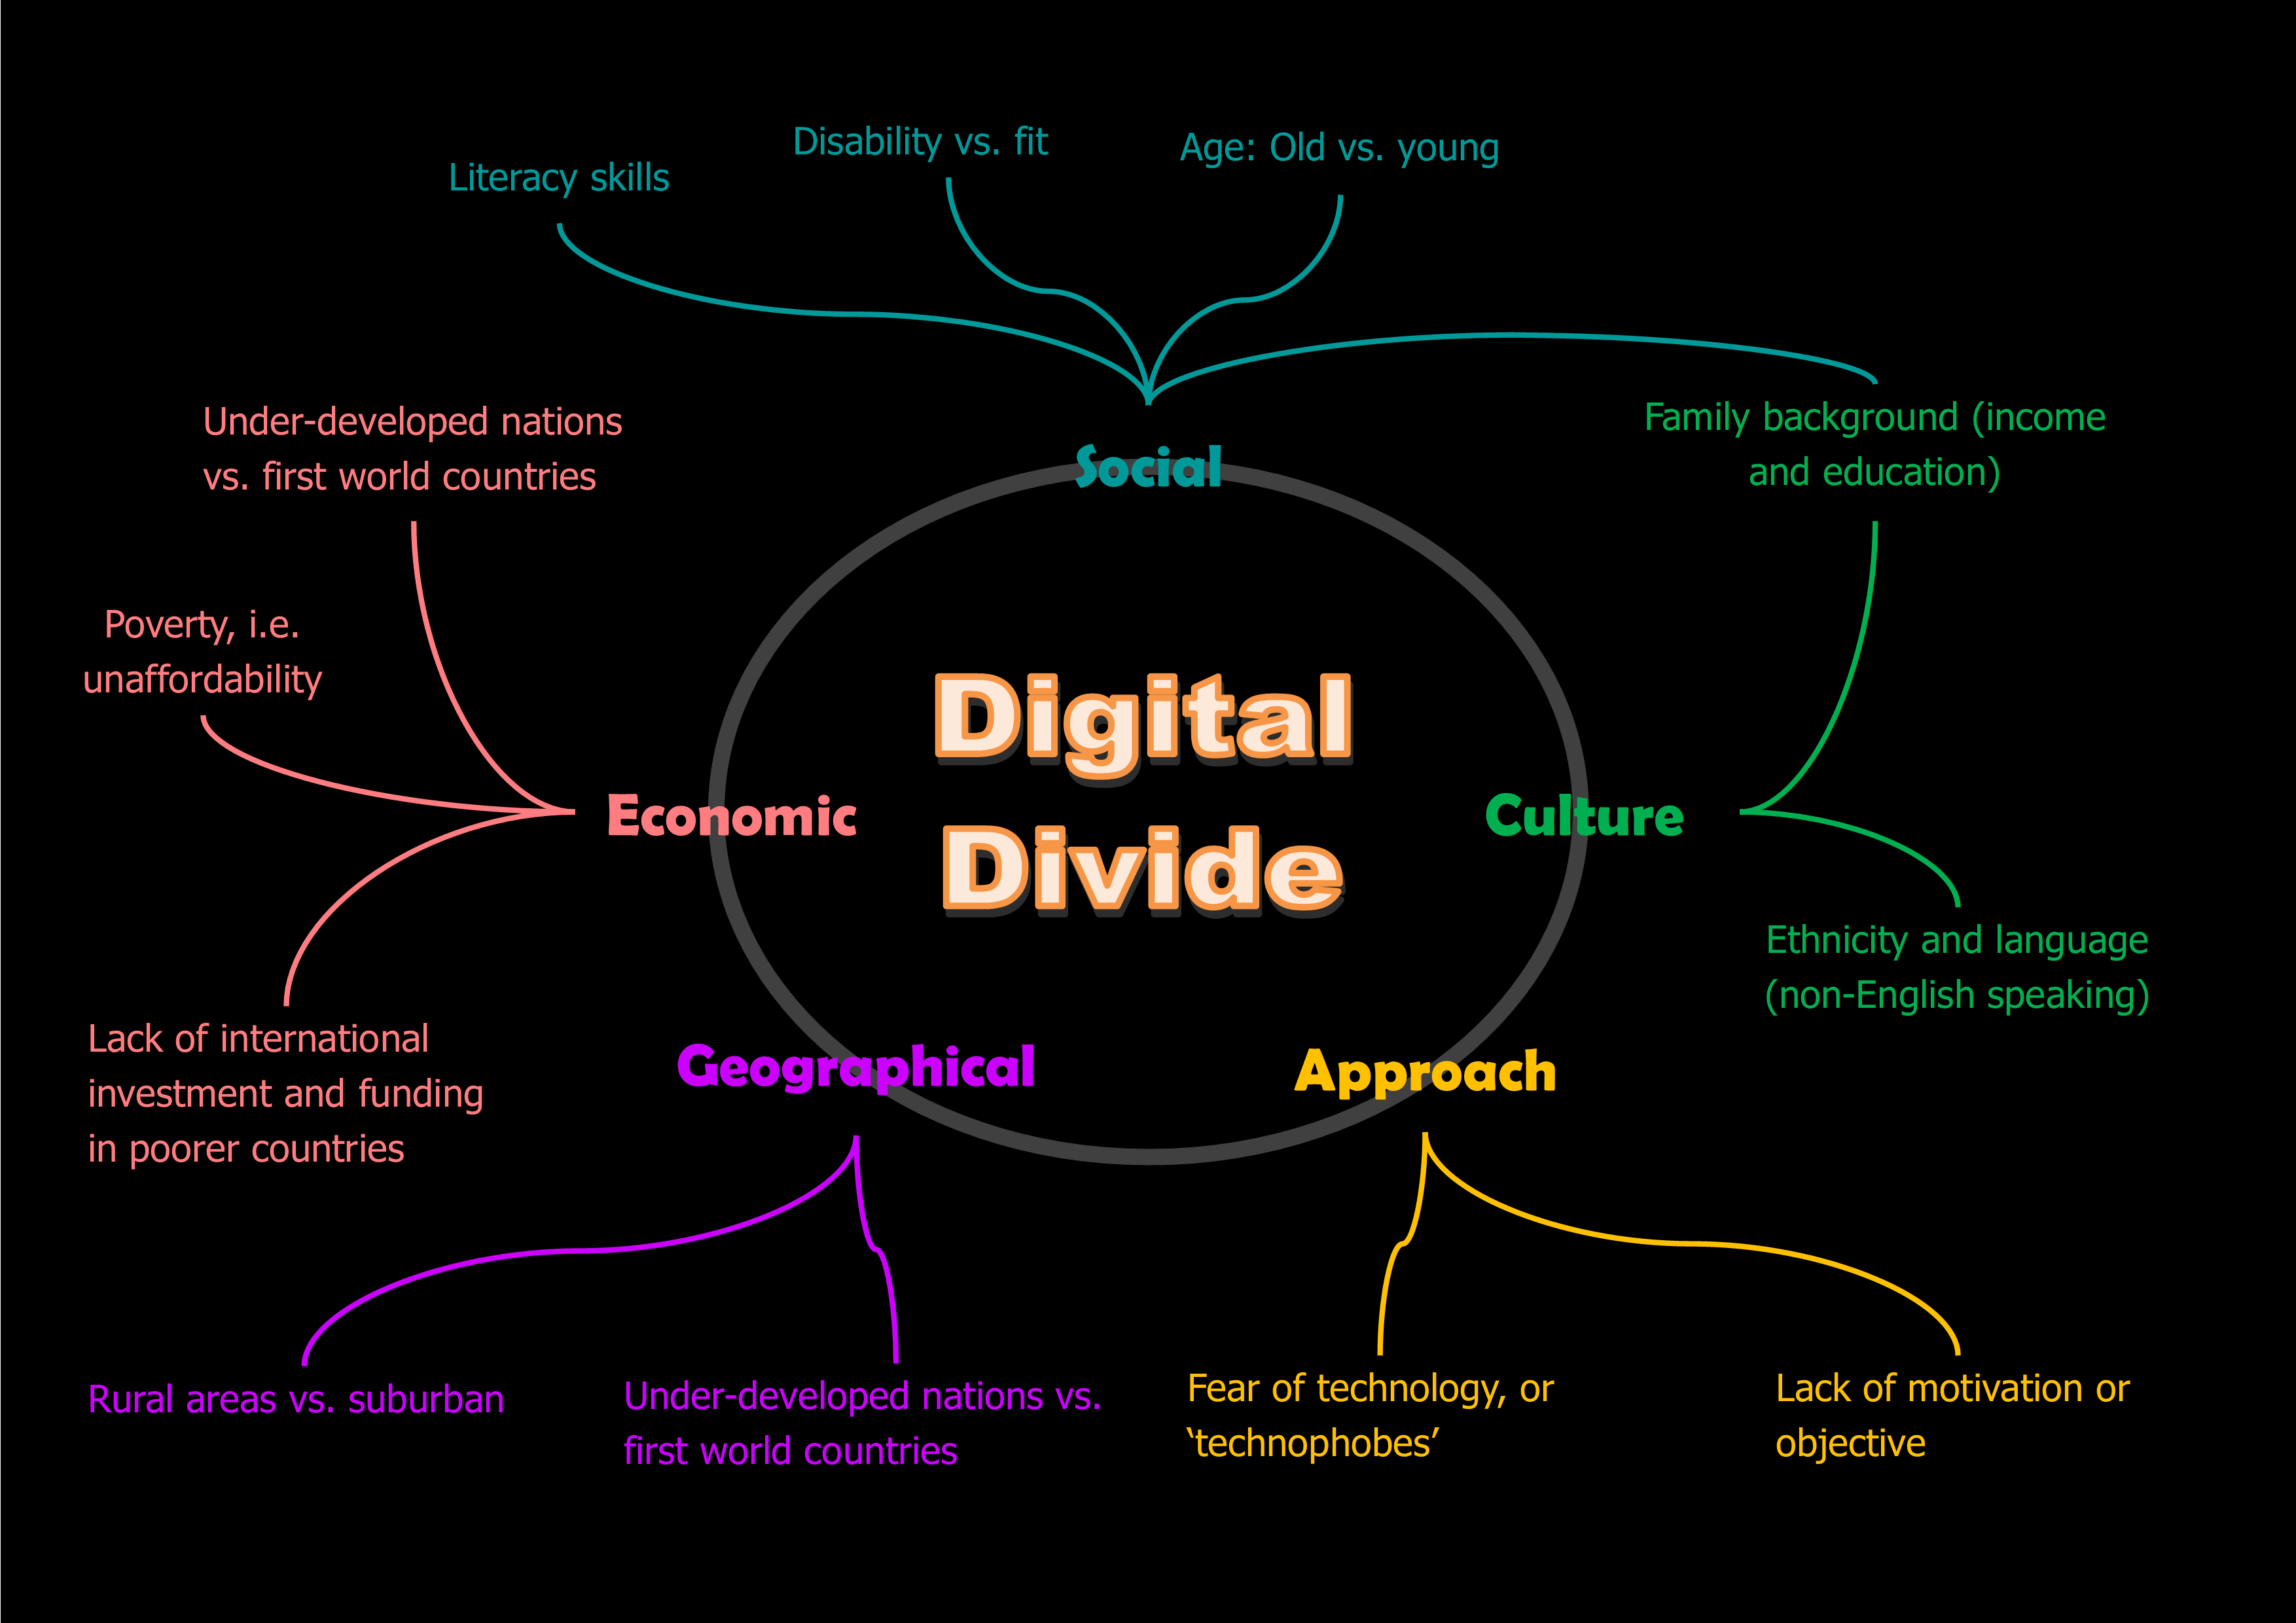 https://theportus.nyc3.digitaloceanspaces.com/static/presentations/digital/computer-history/digital-divide.png